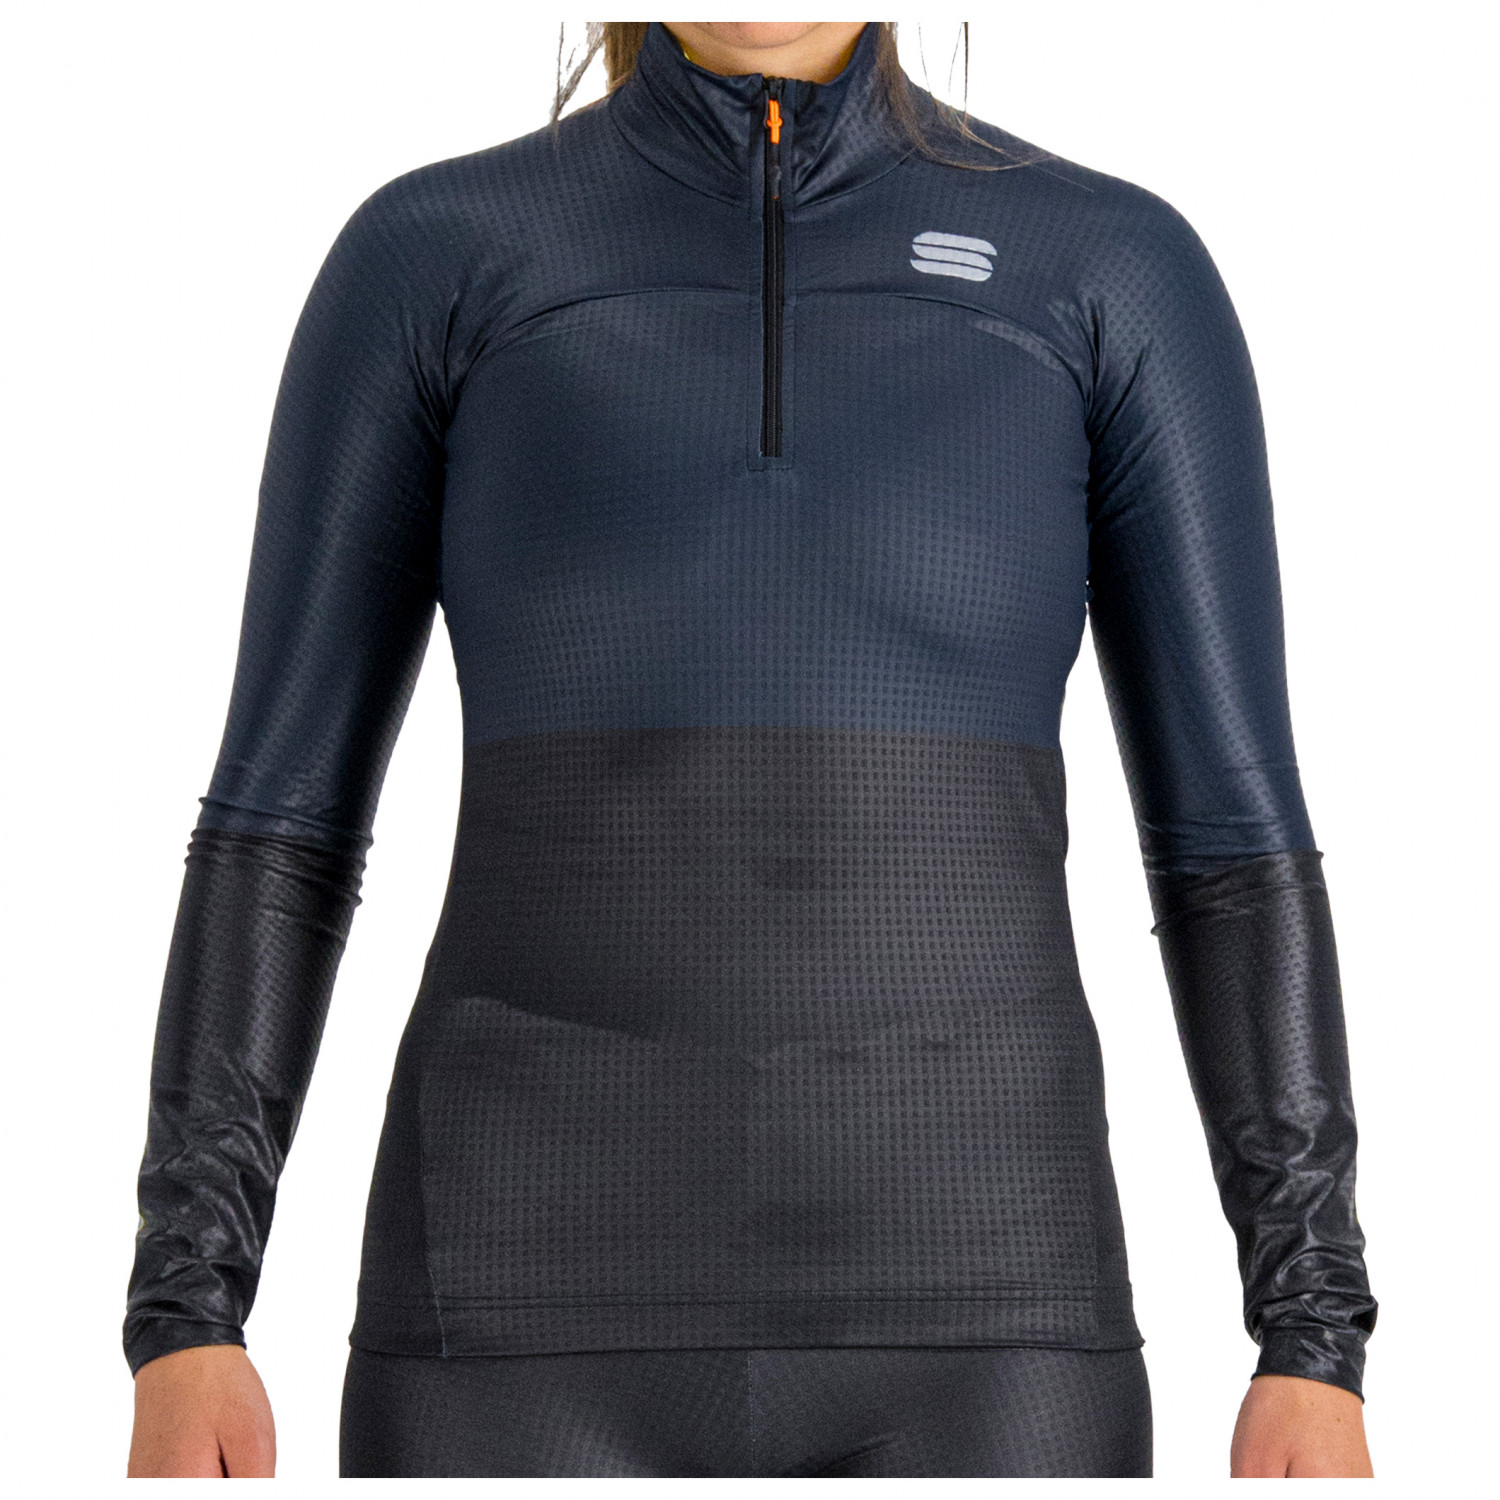 цена Куртка для беговых лыж Sportful Women's Apex Jersey, цвет Black/Galaxy Blue